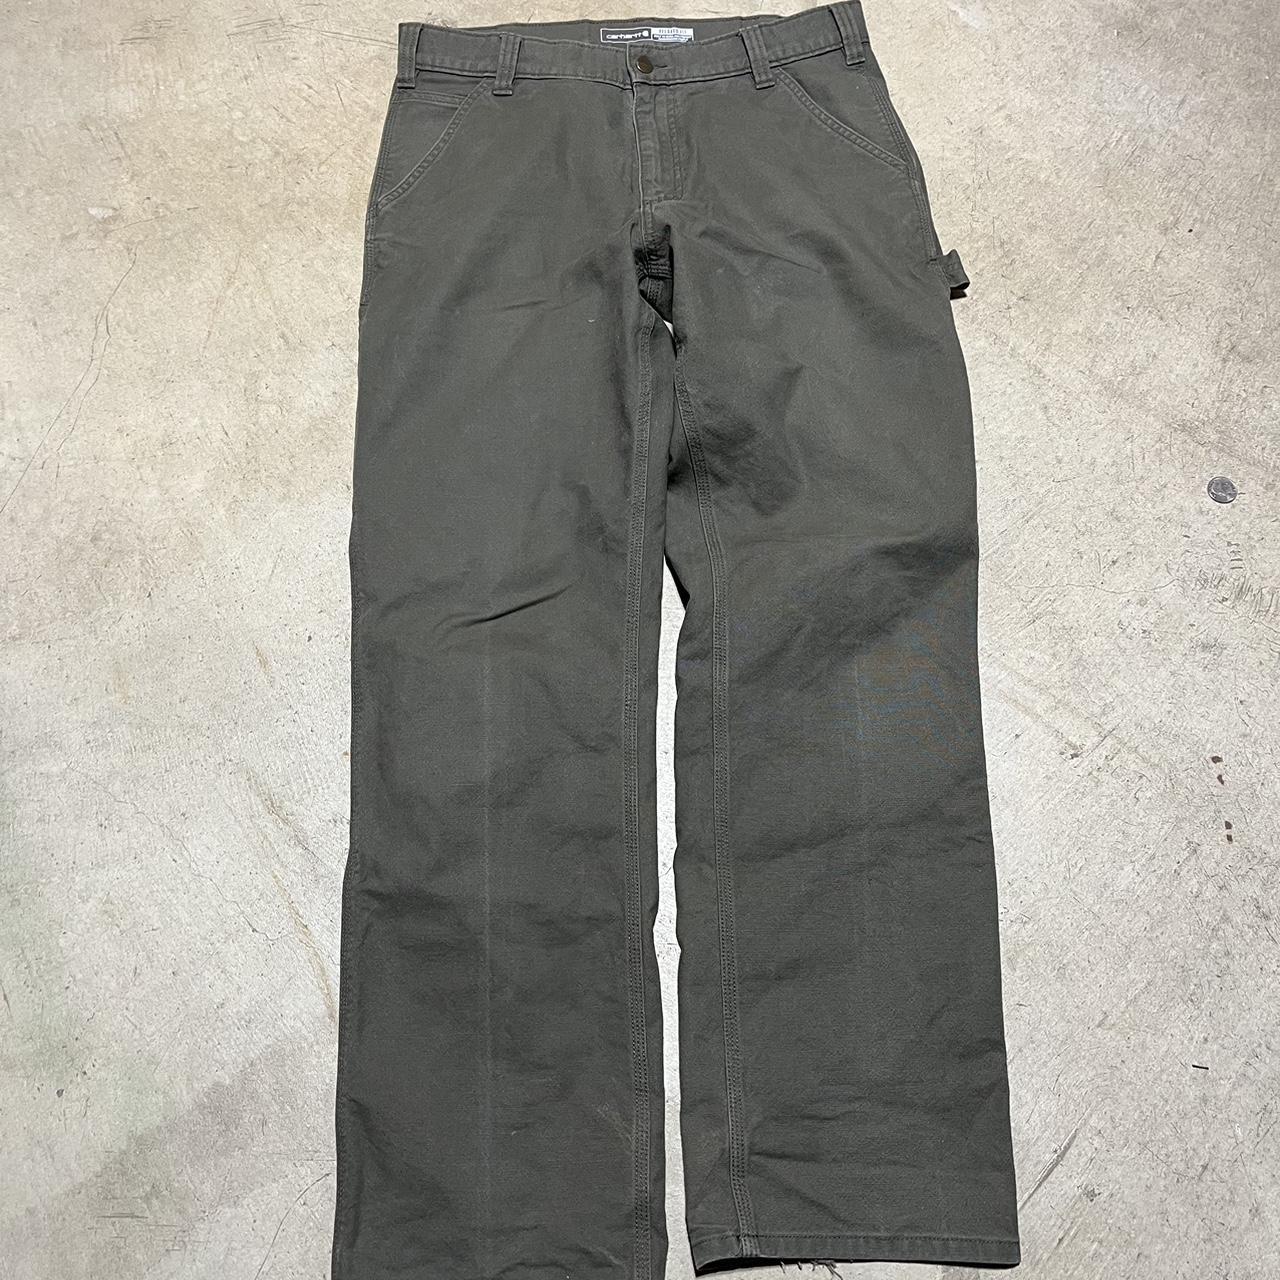 Carhartt Workwear olive green pants 34x34 no flaws - Depop